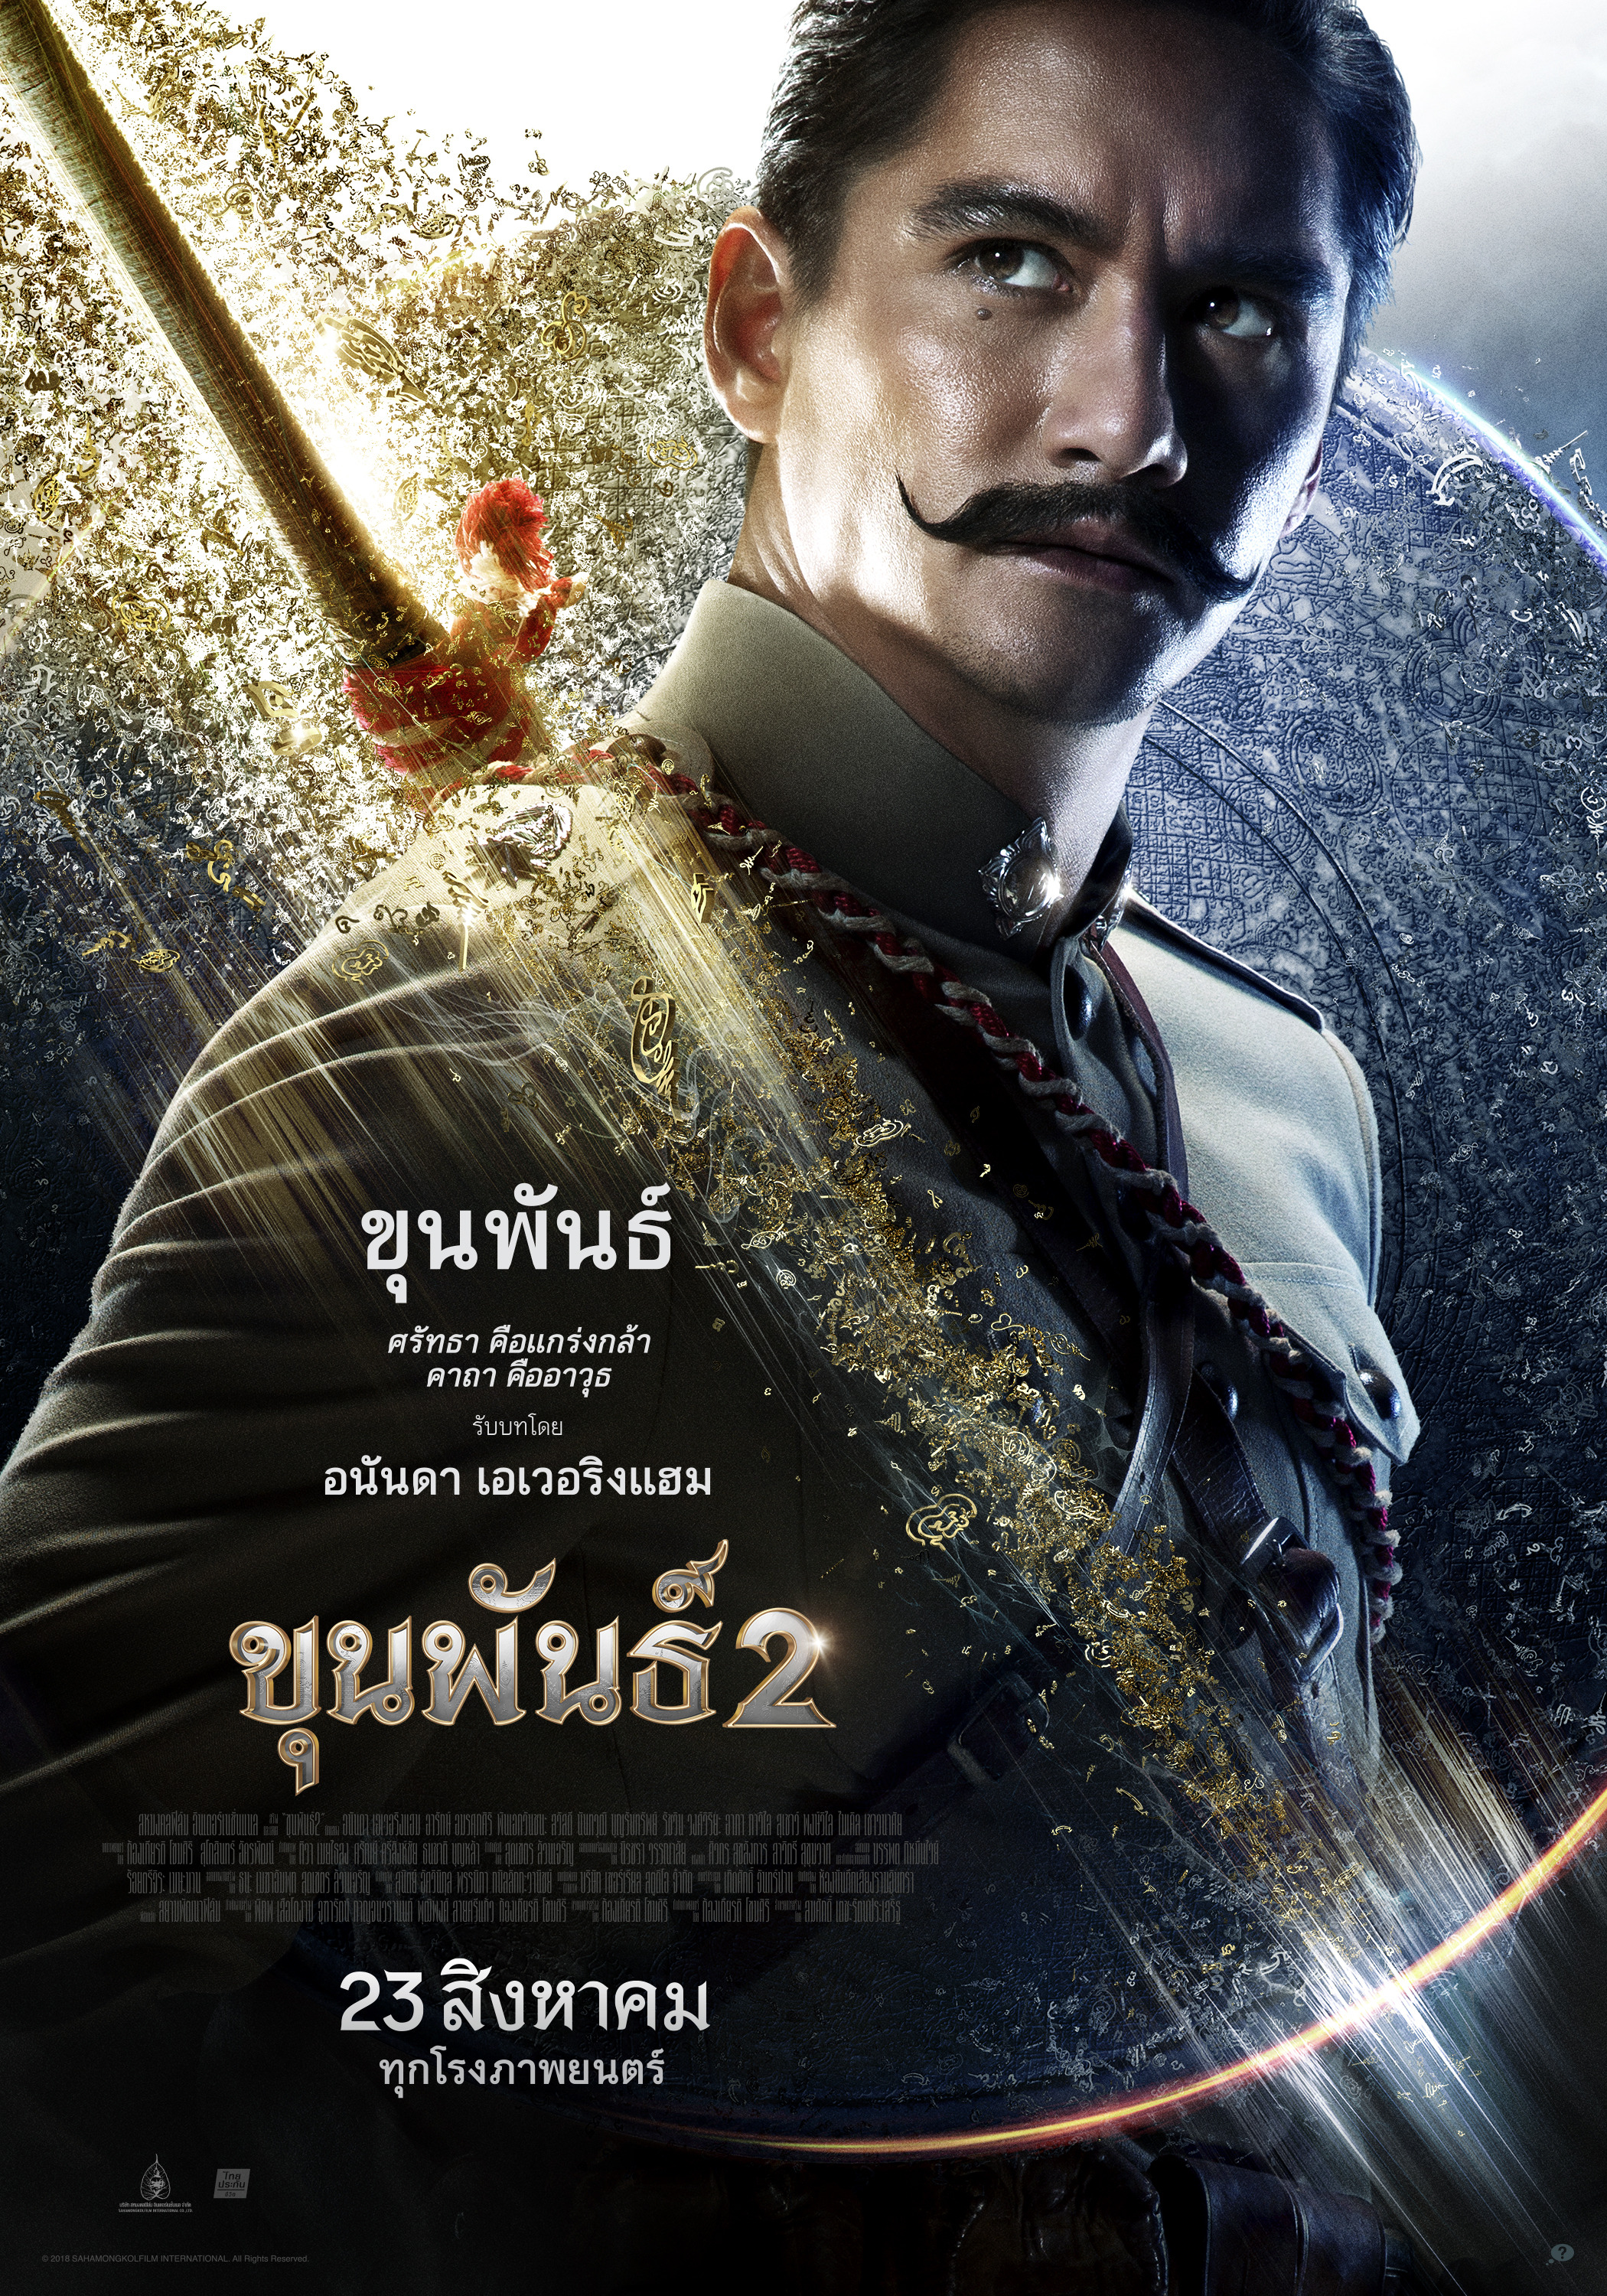 Mega Sized Movie Poster Image for Khun Phan 2 (#3 of 8)